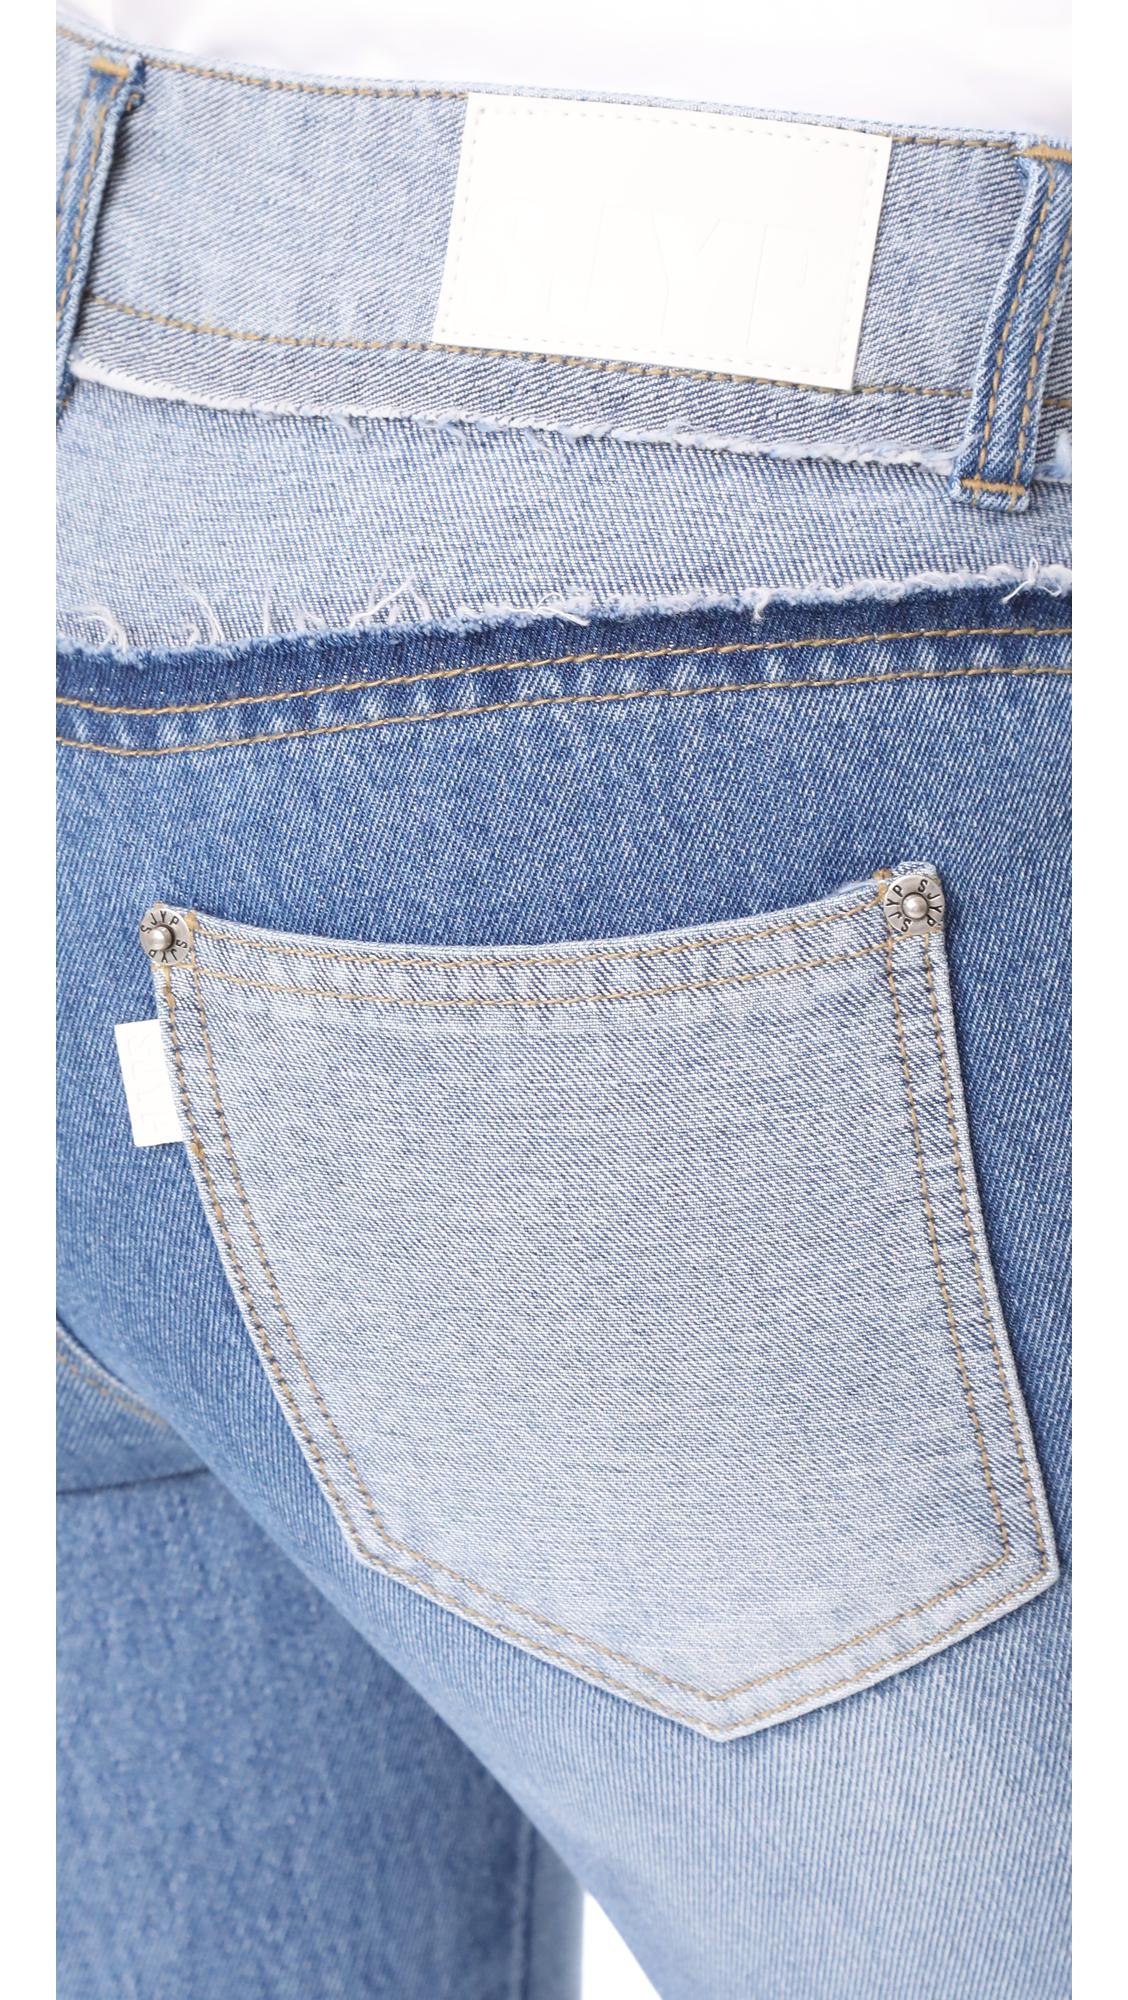 Lyst - Sjyp Cutoff Jeans in Blue